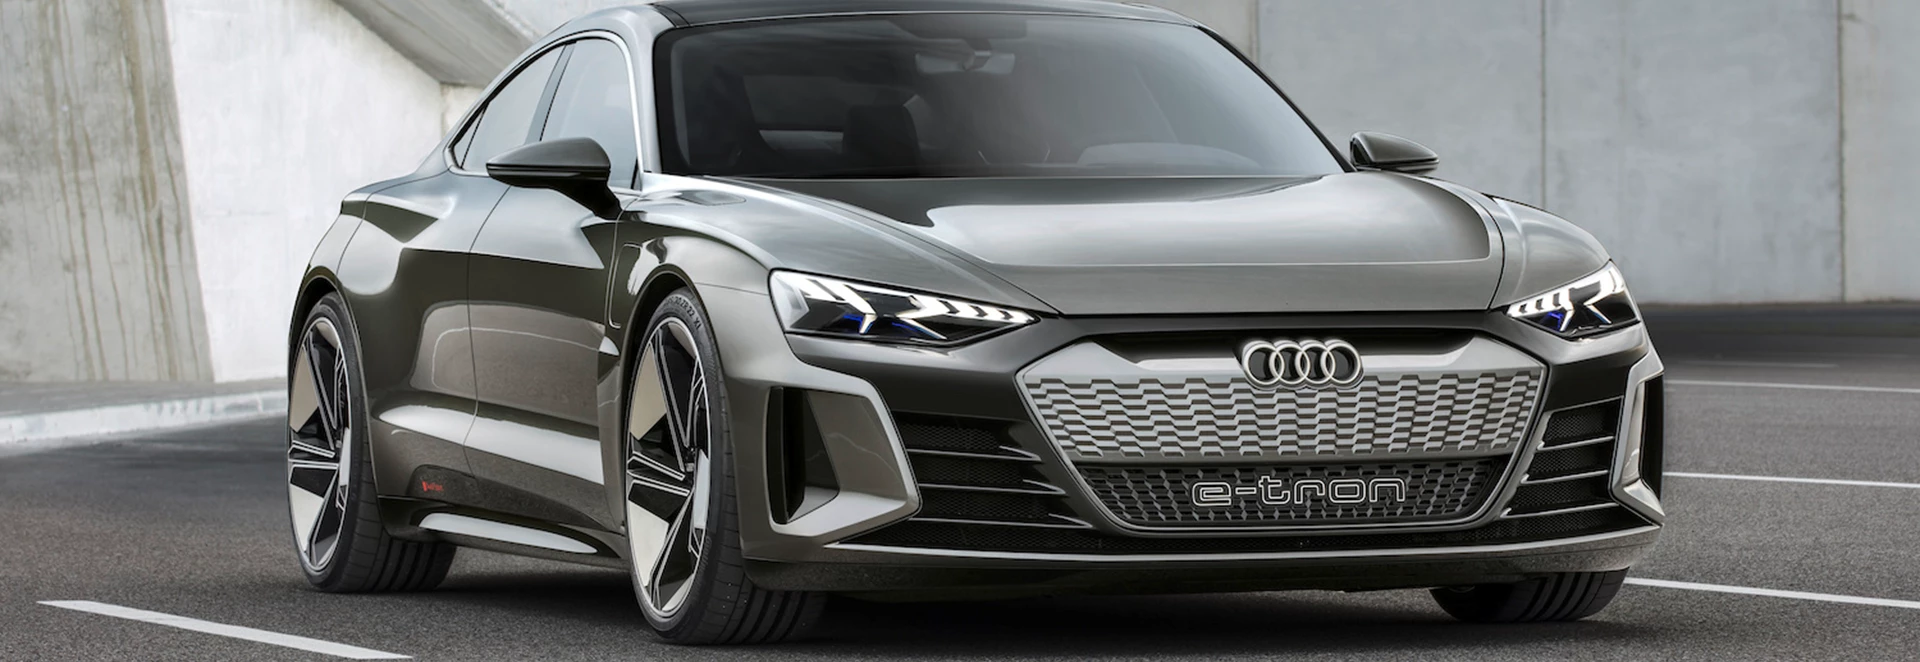 Audi e-tron GT: Audi's rival to the Tesla Model S